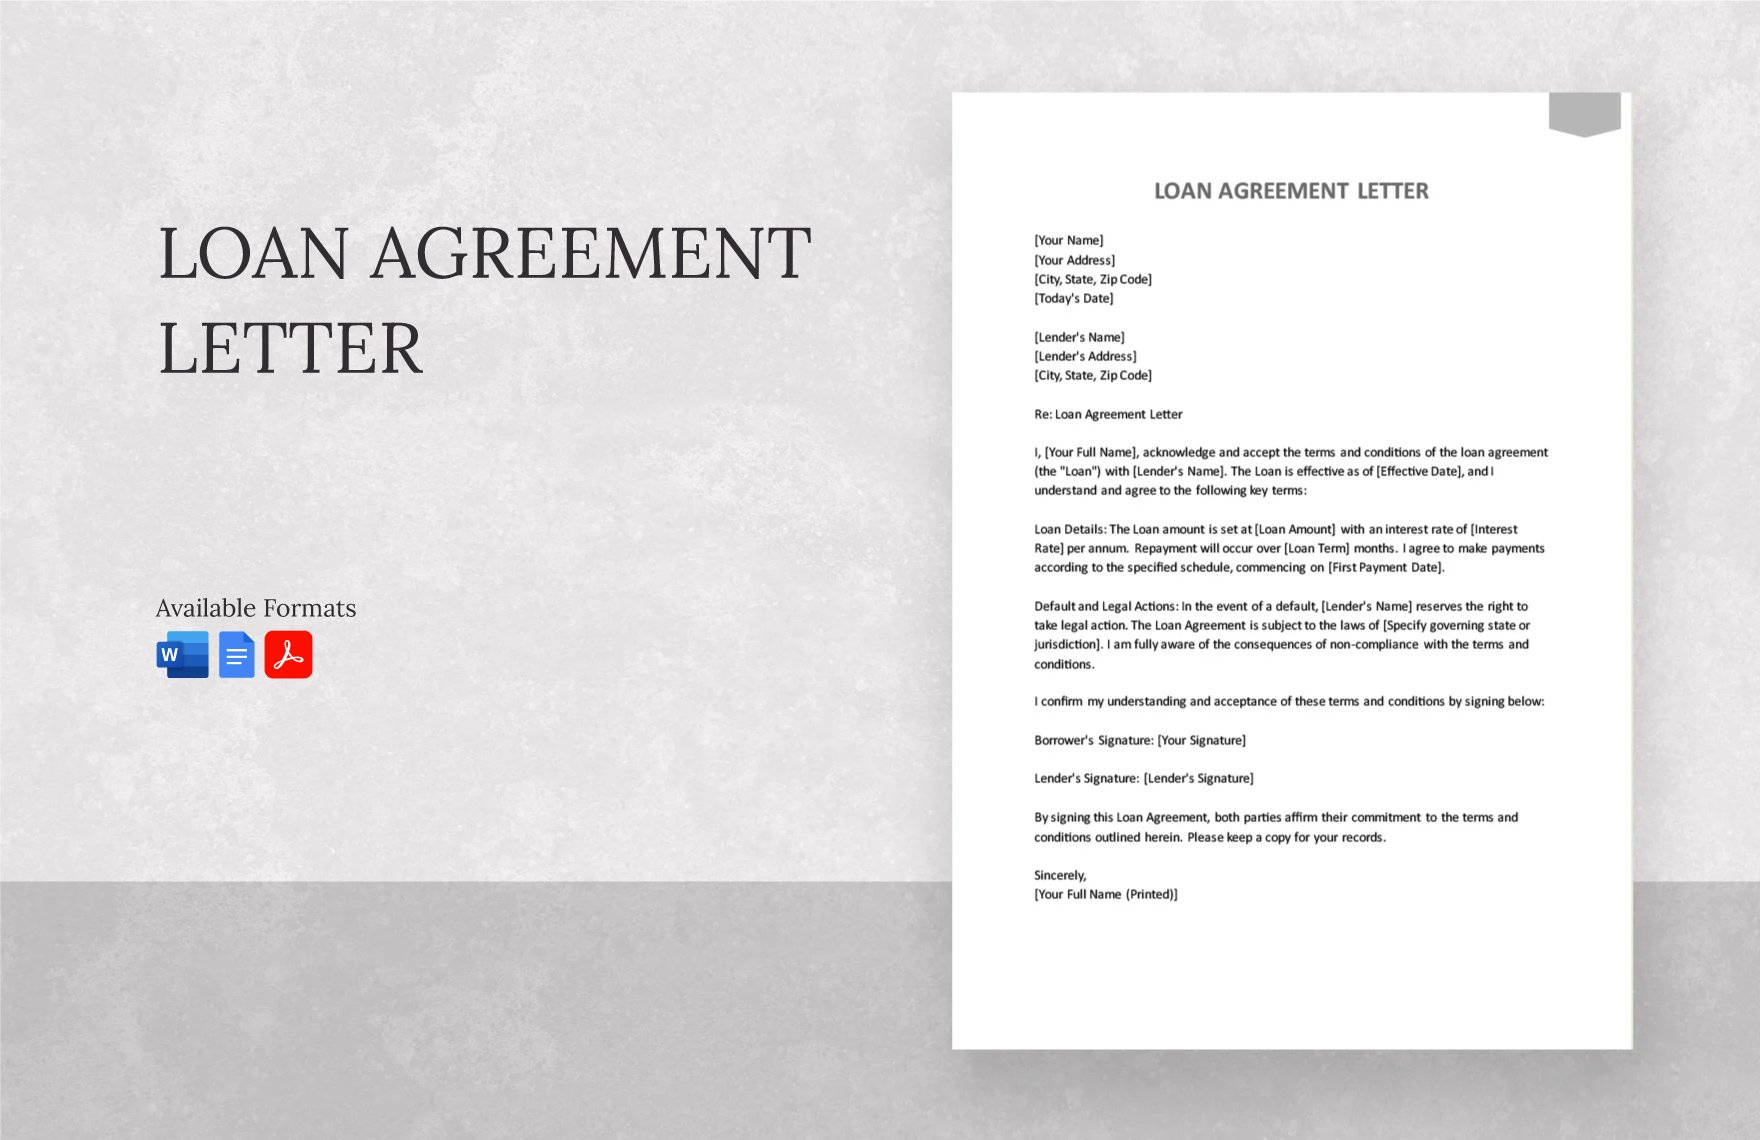 Loan Agreement Letter in Word, Google Docs, PDF